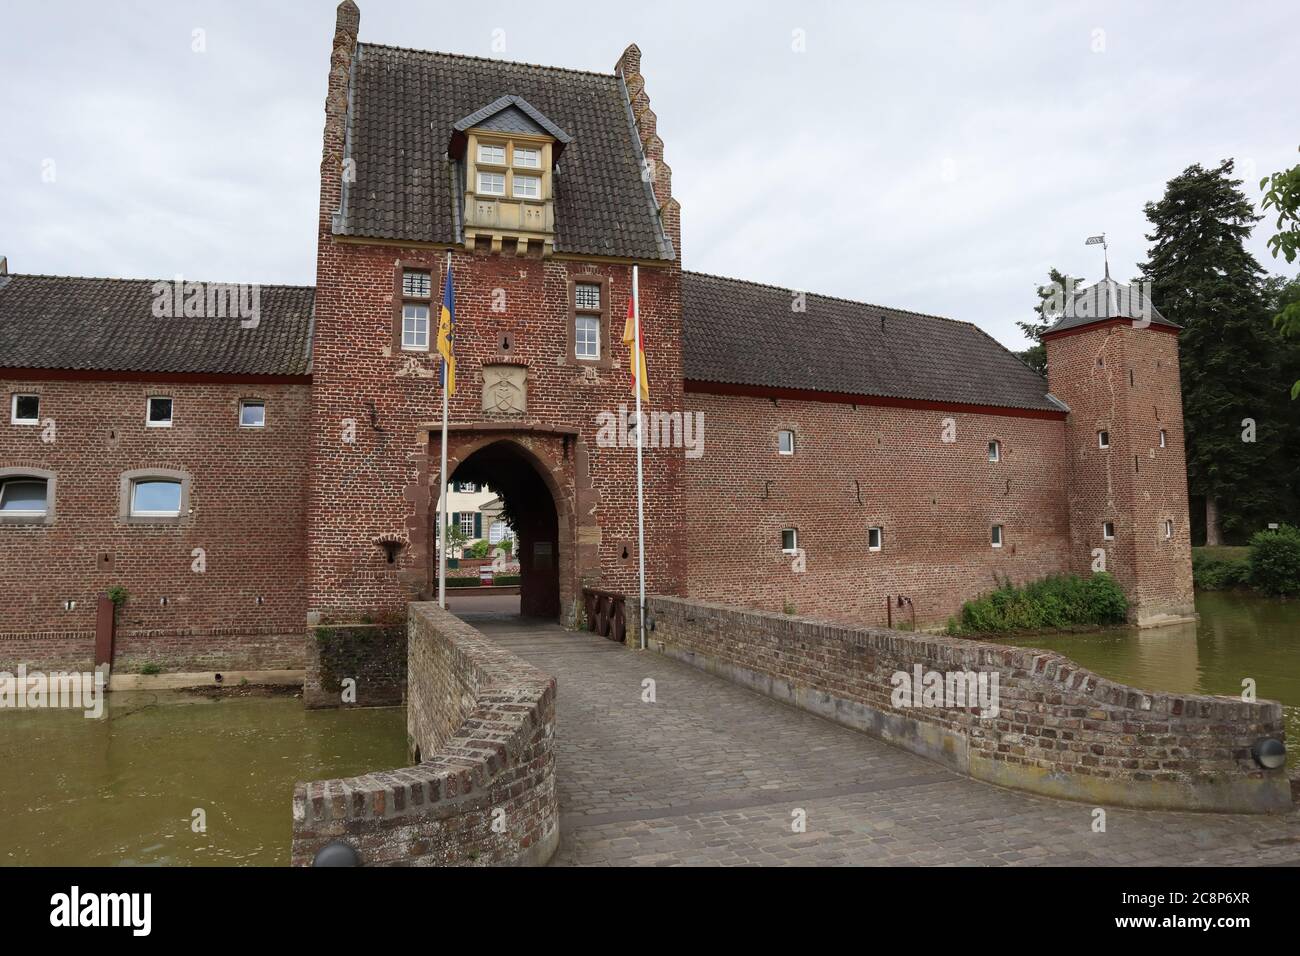 Heimerzheim, Nordrhein-Westfalen/ Germany - June 13 2020: Castle Heimerzheim - moated castle located in North Rhine-Westphalia, Germany Stock Photo